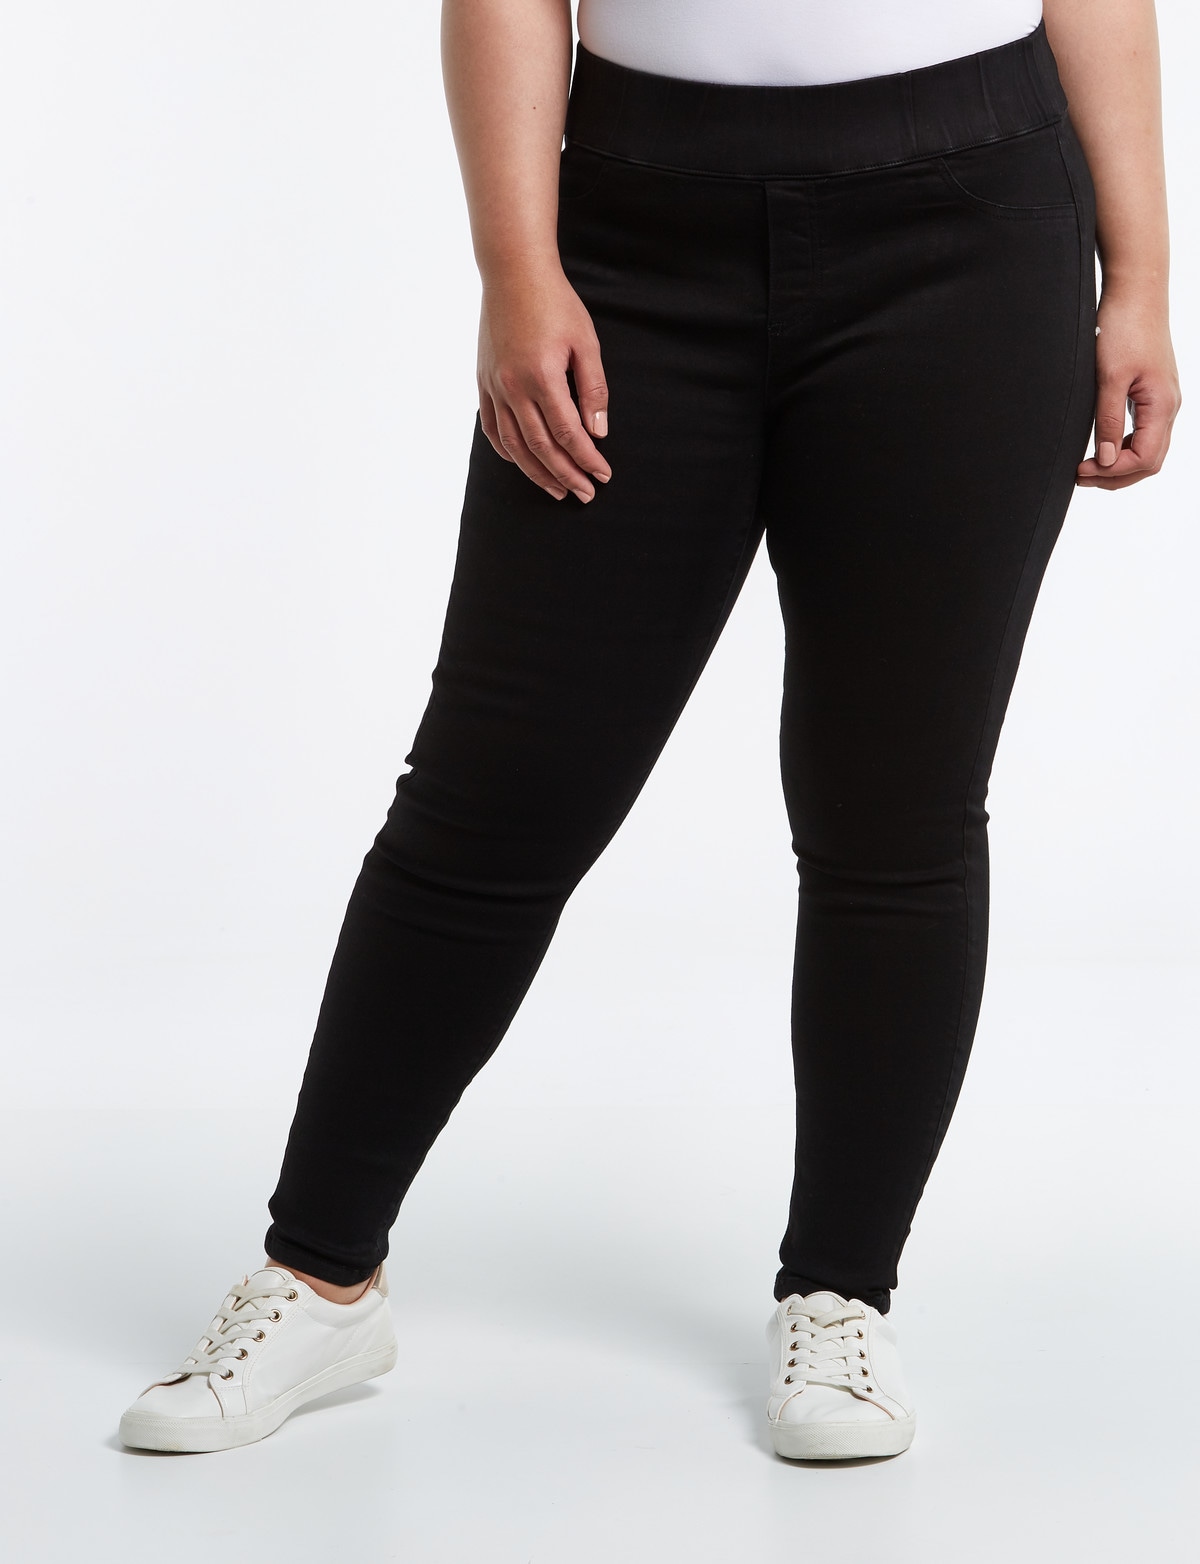 Denim Republic Curve Skinny Pull-On Ultra Stretch Jean, Black - Jeans, Pants  & Shorts